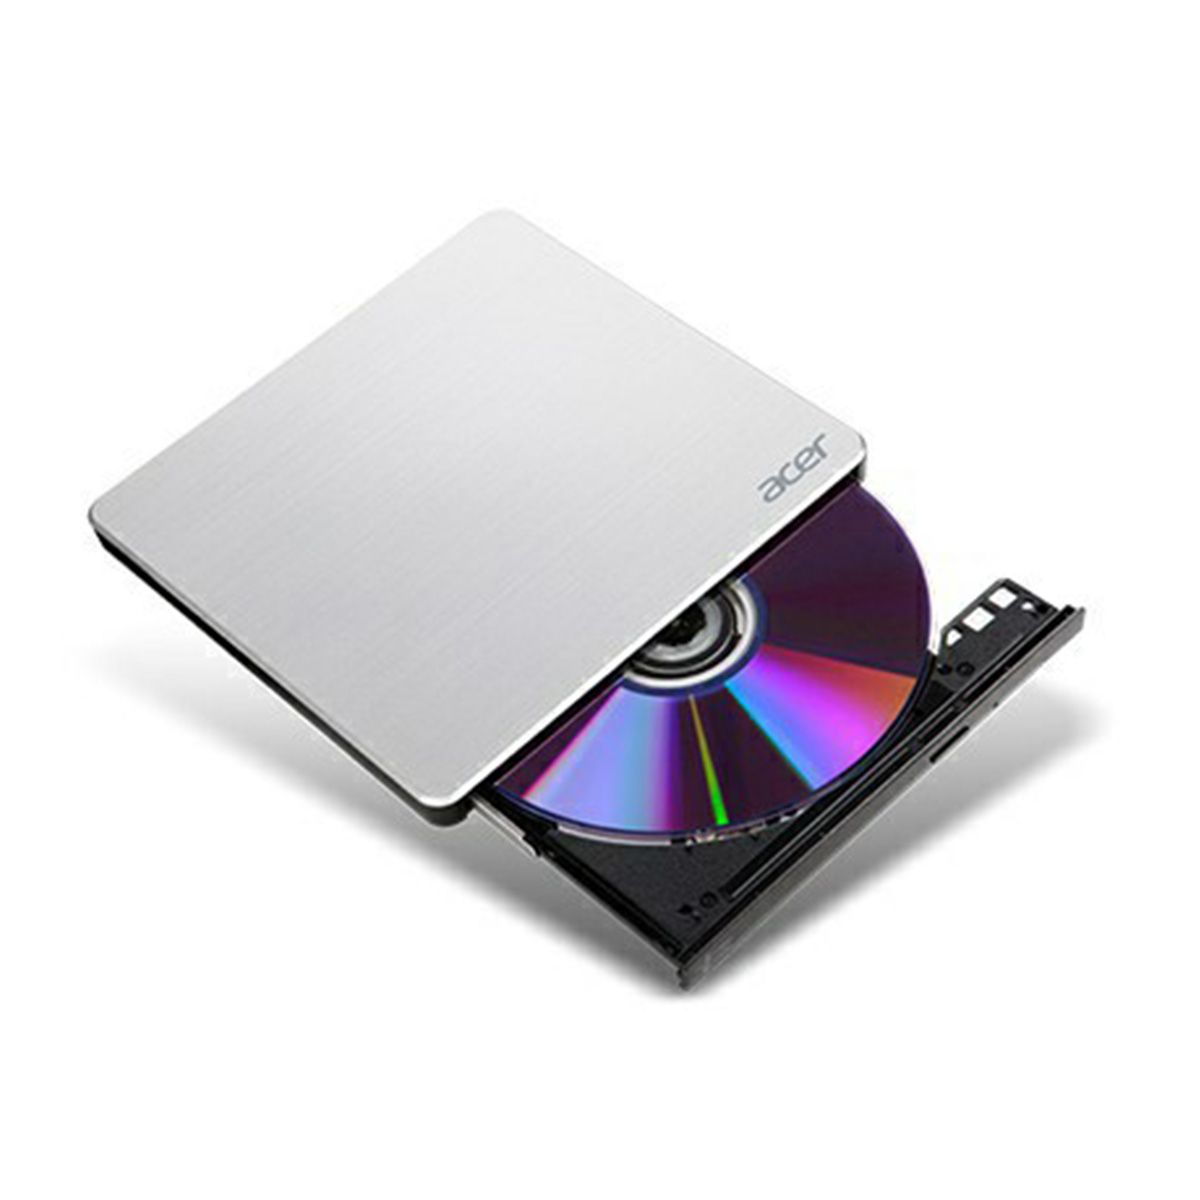 ACER EXTERNAL OPTICAL DRIVE USB 2.0 DVD WRITER SILVER ULTRA SLIM แบบพกพา (เครื่องอ่าน-เขียนดีวีดีพกพา)